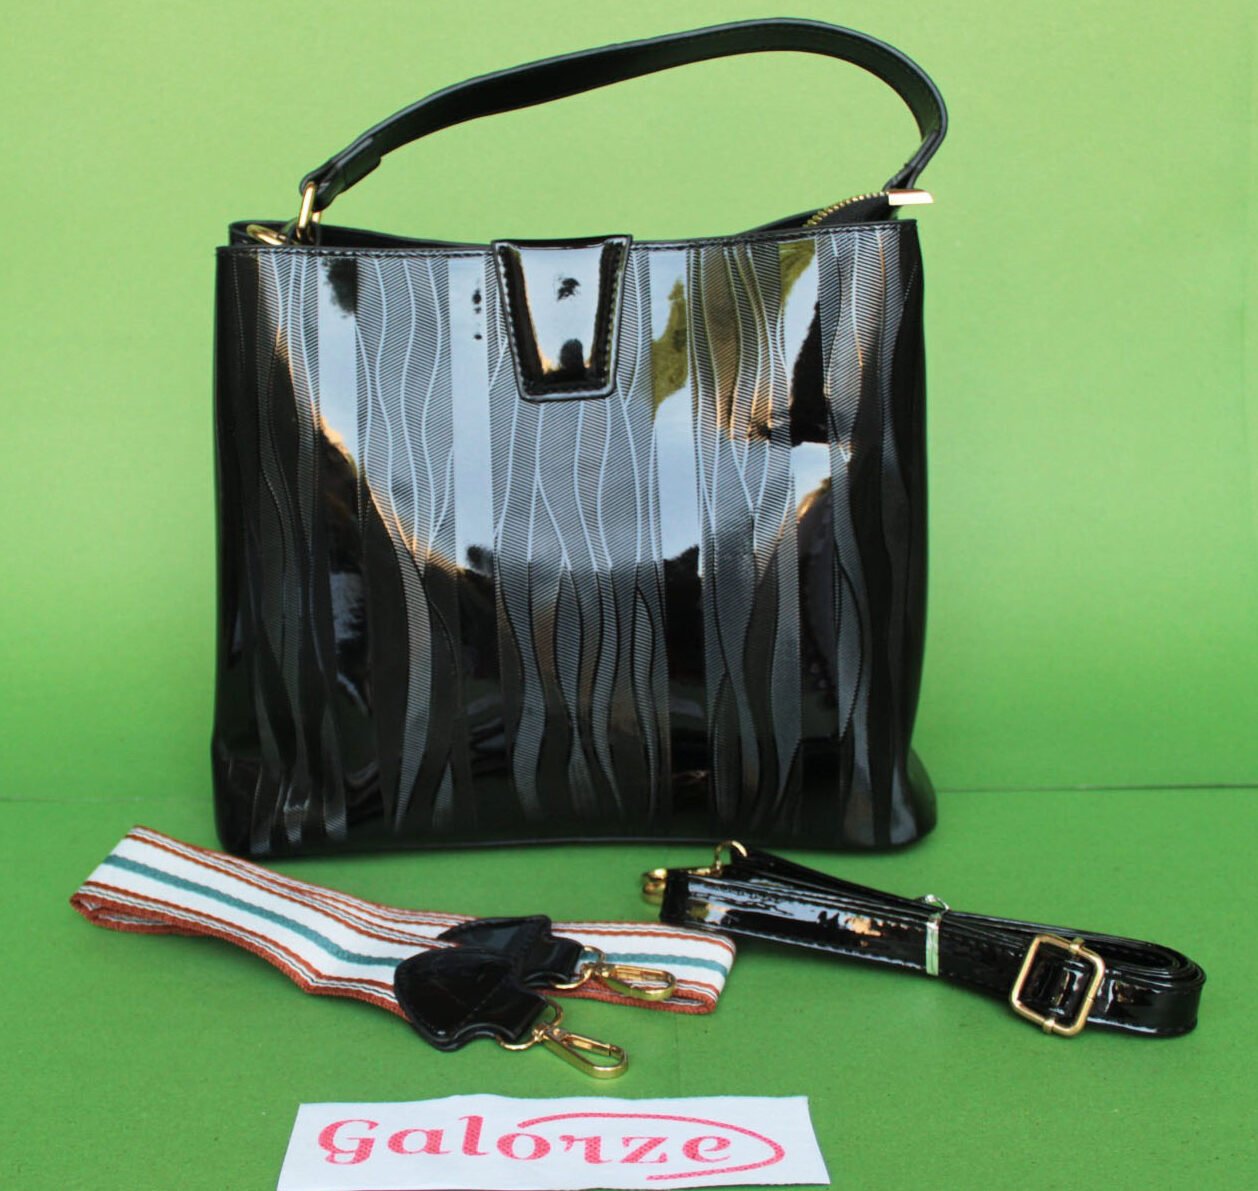 Galorze: Glossy black handbag, branded, trendy and stylo bags.